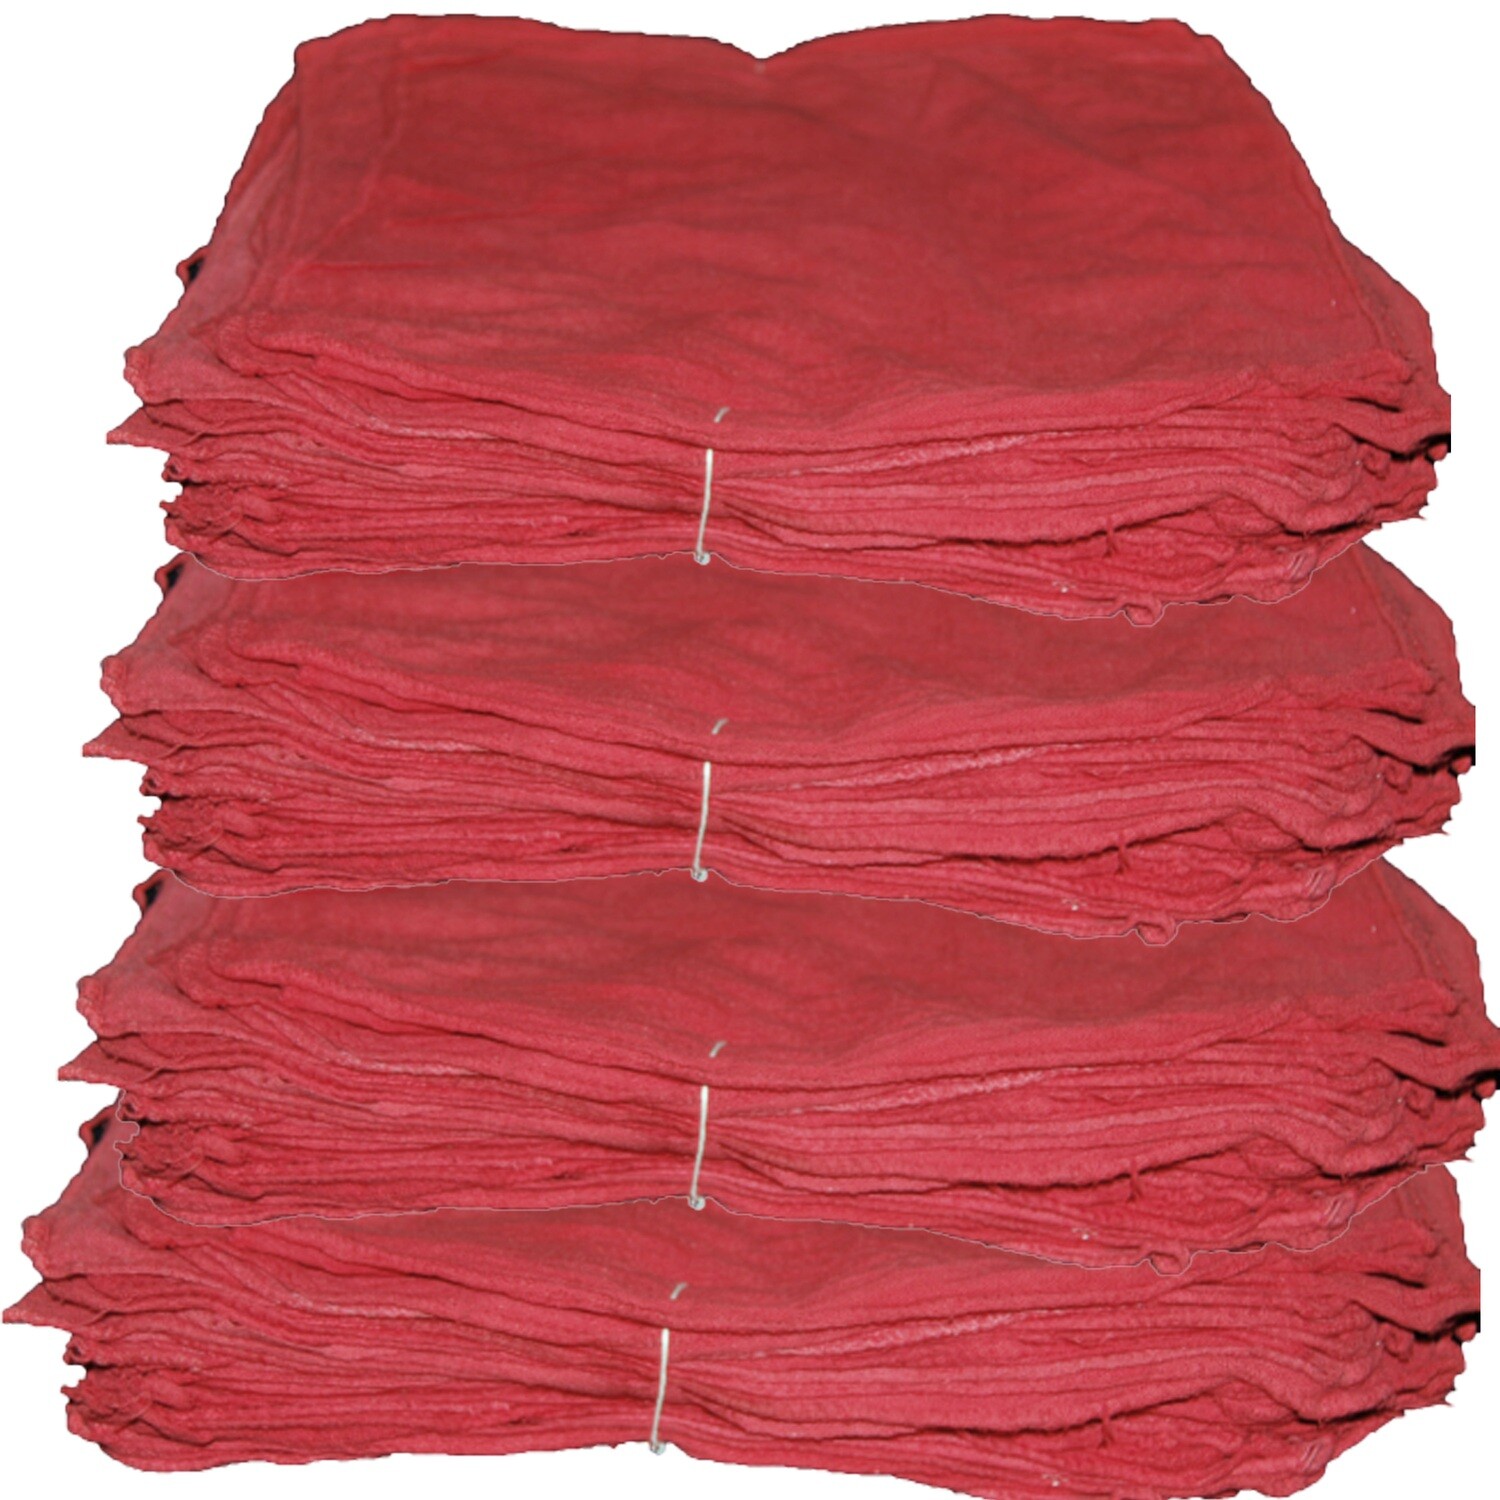 500 New Red Shop Towels 14 X 14